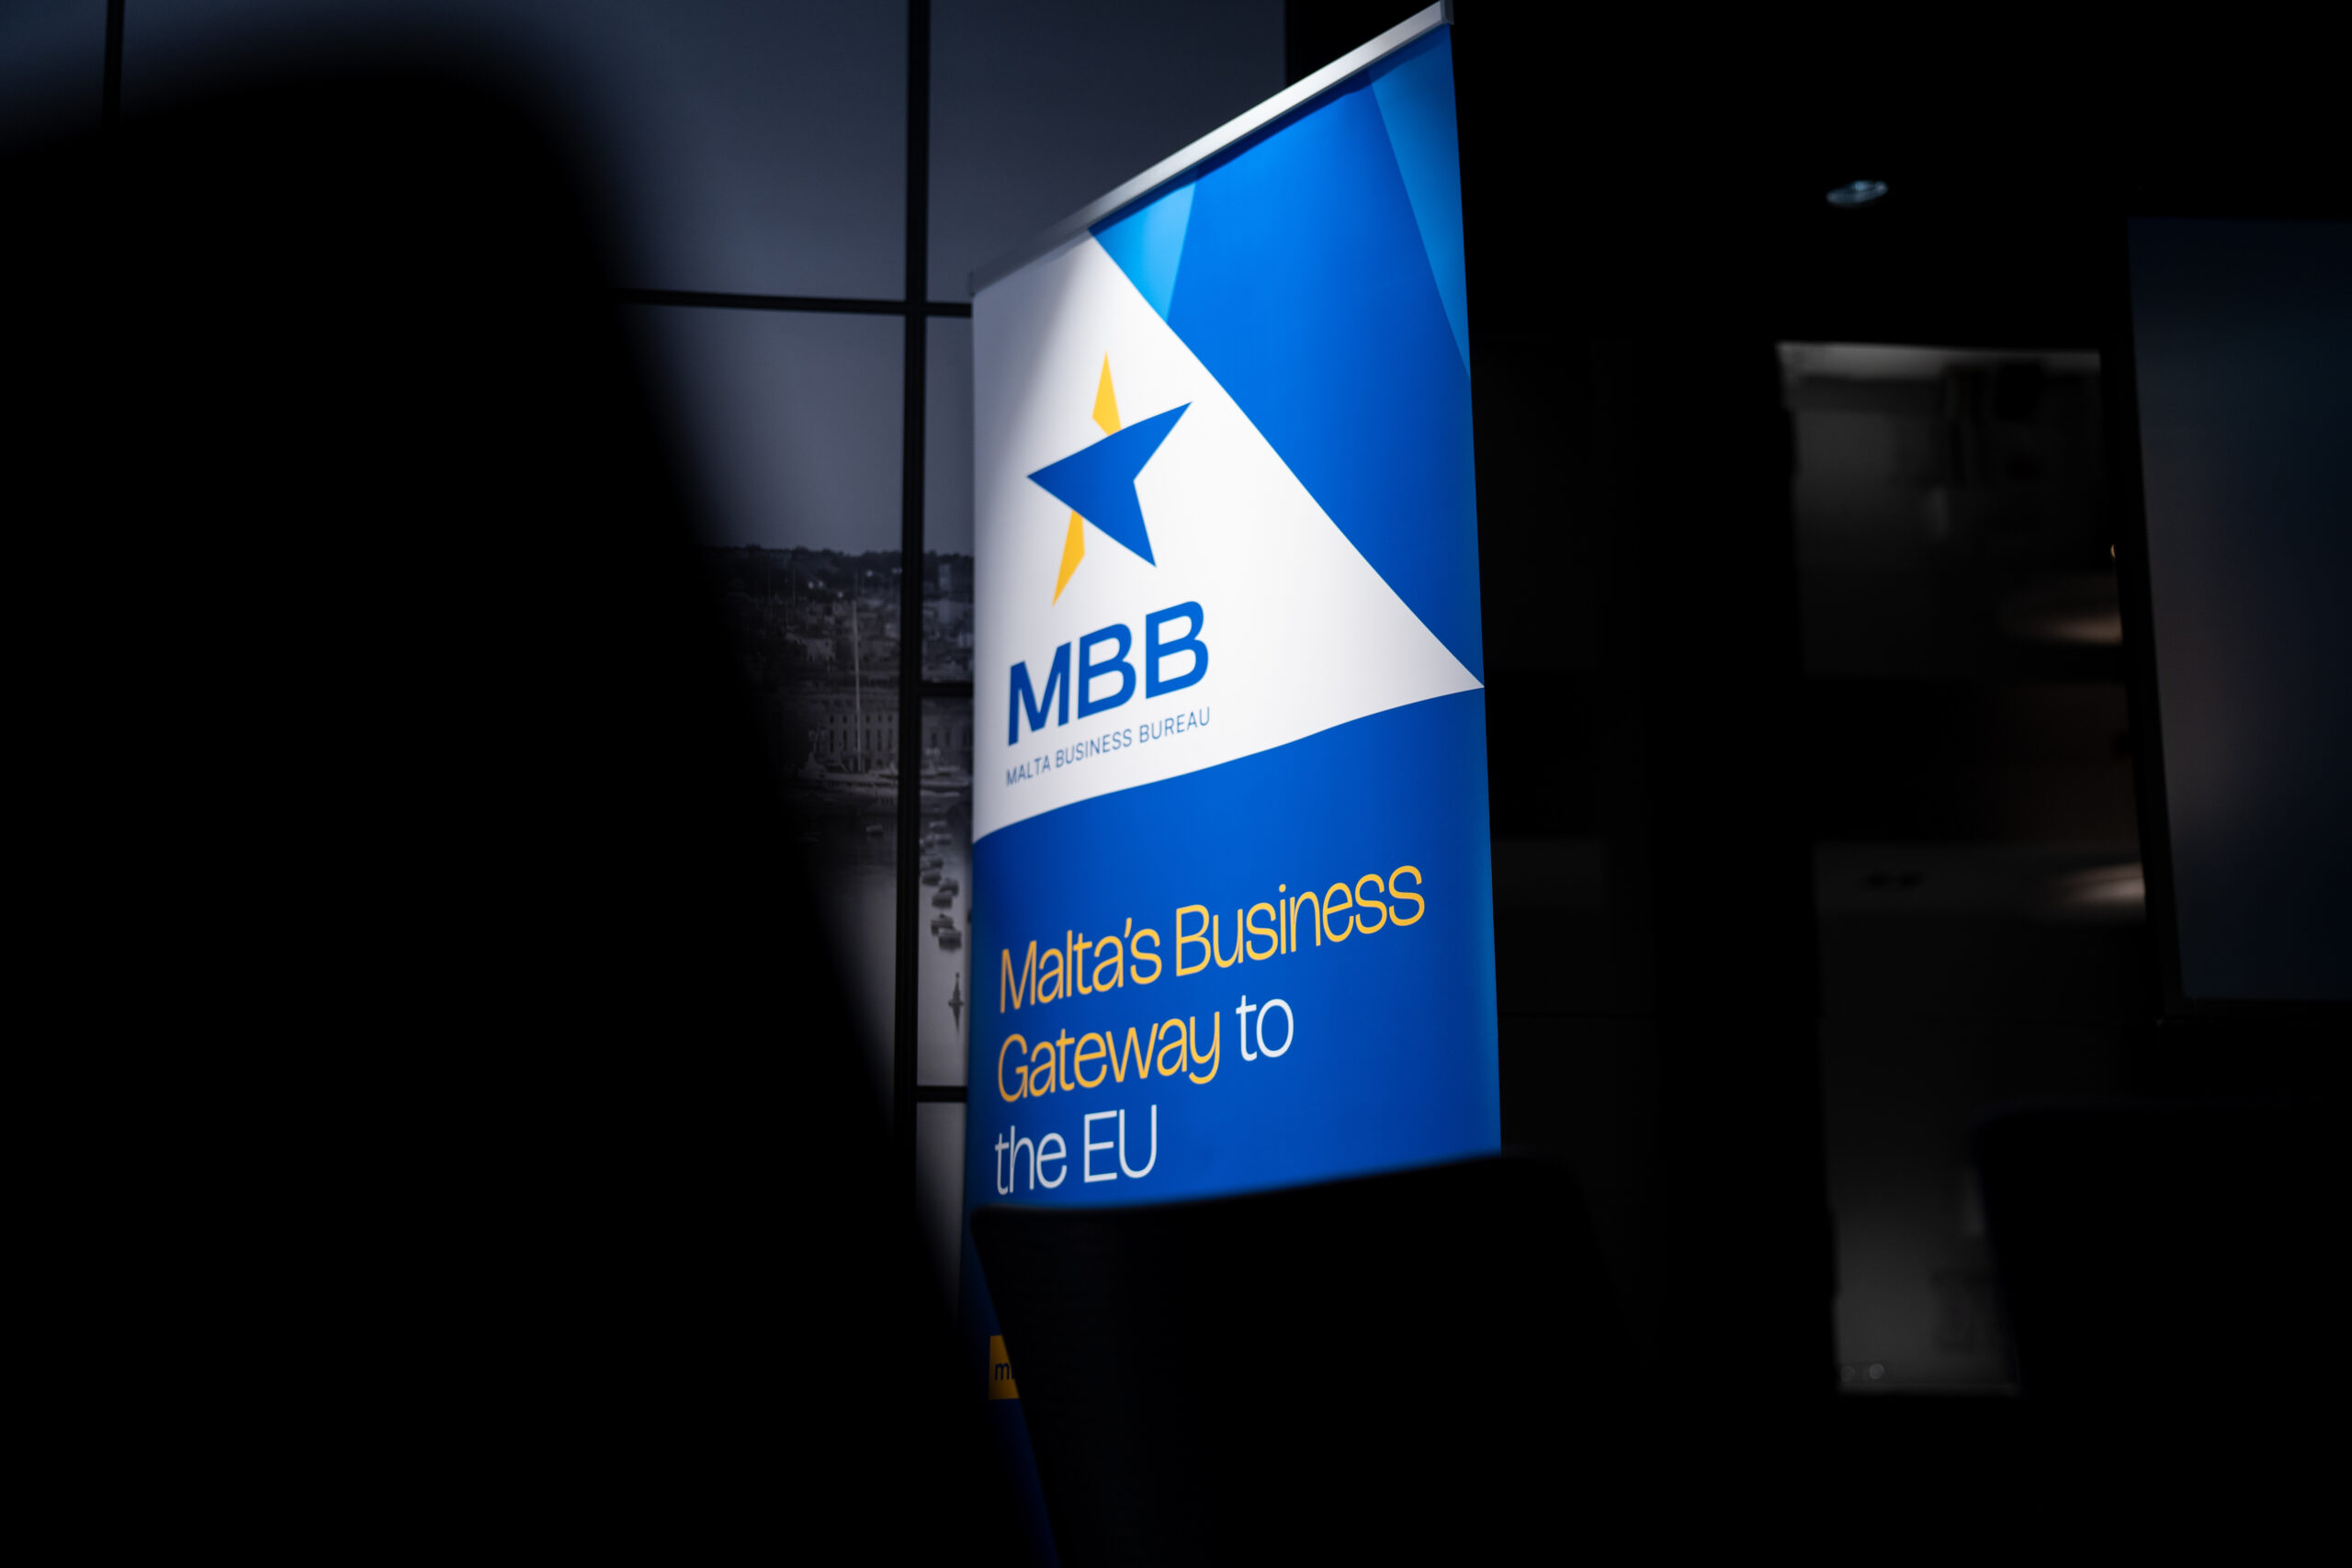 Malta Business Bureau Reaffirms its Role as Malta’s Business Gateway to the EU